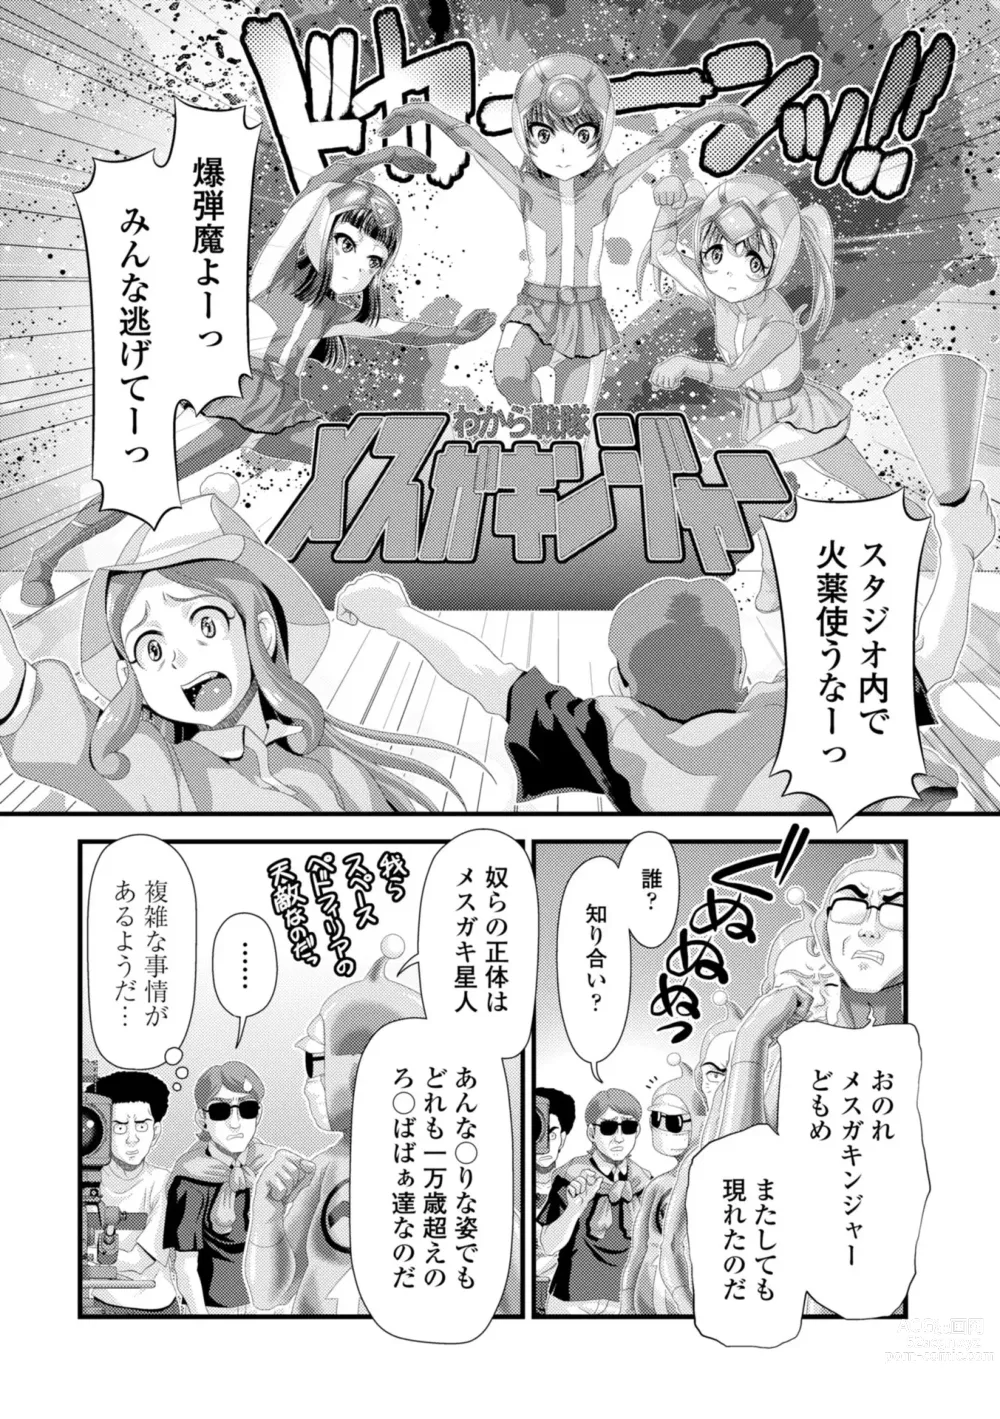 Page 6 of manga minimum material 1